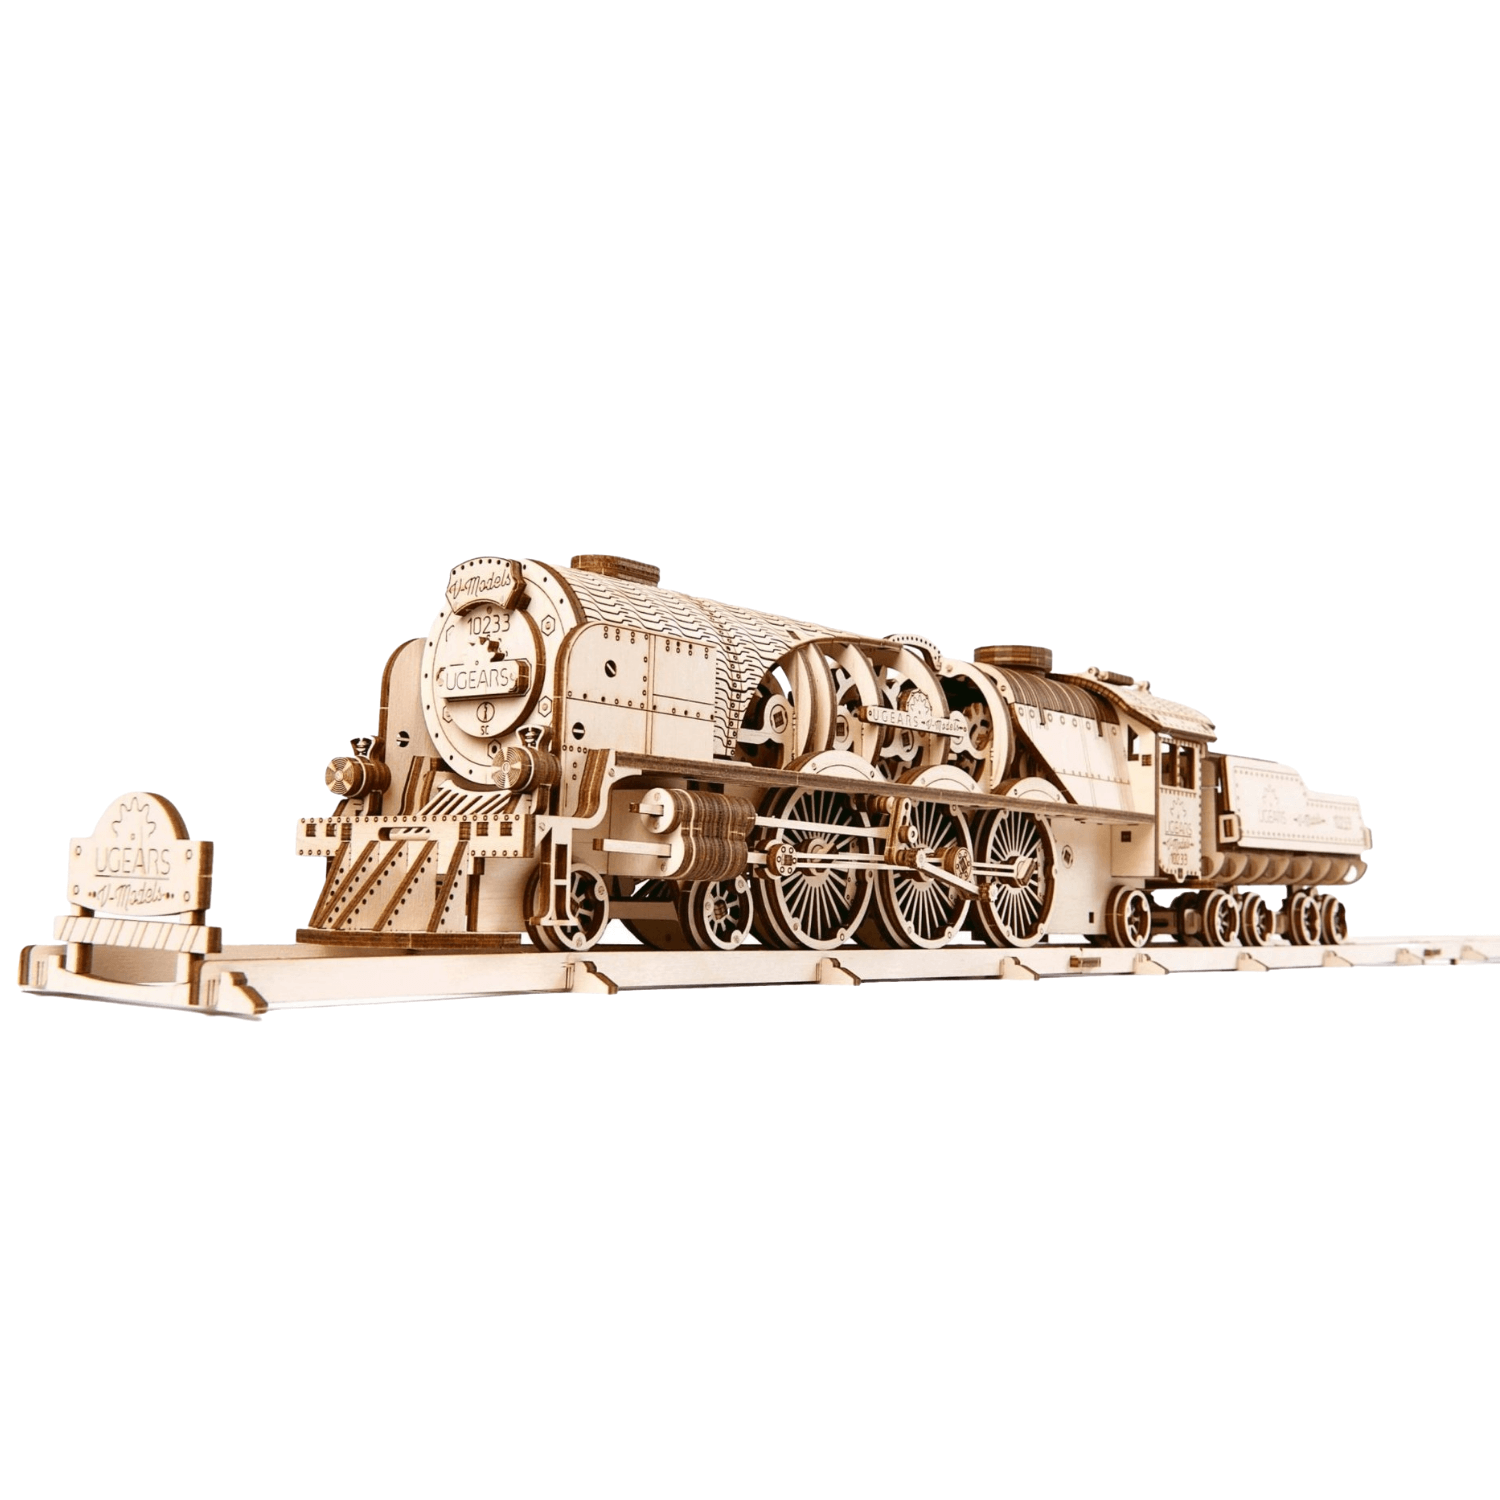 V-Express steam locomotive with tender